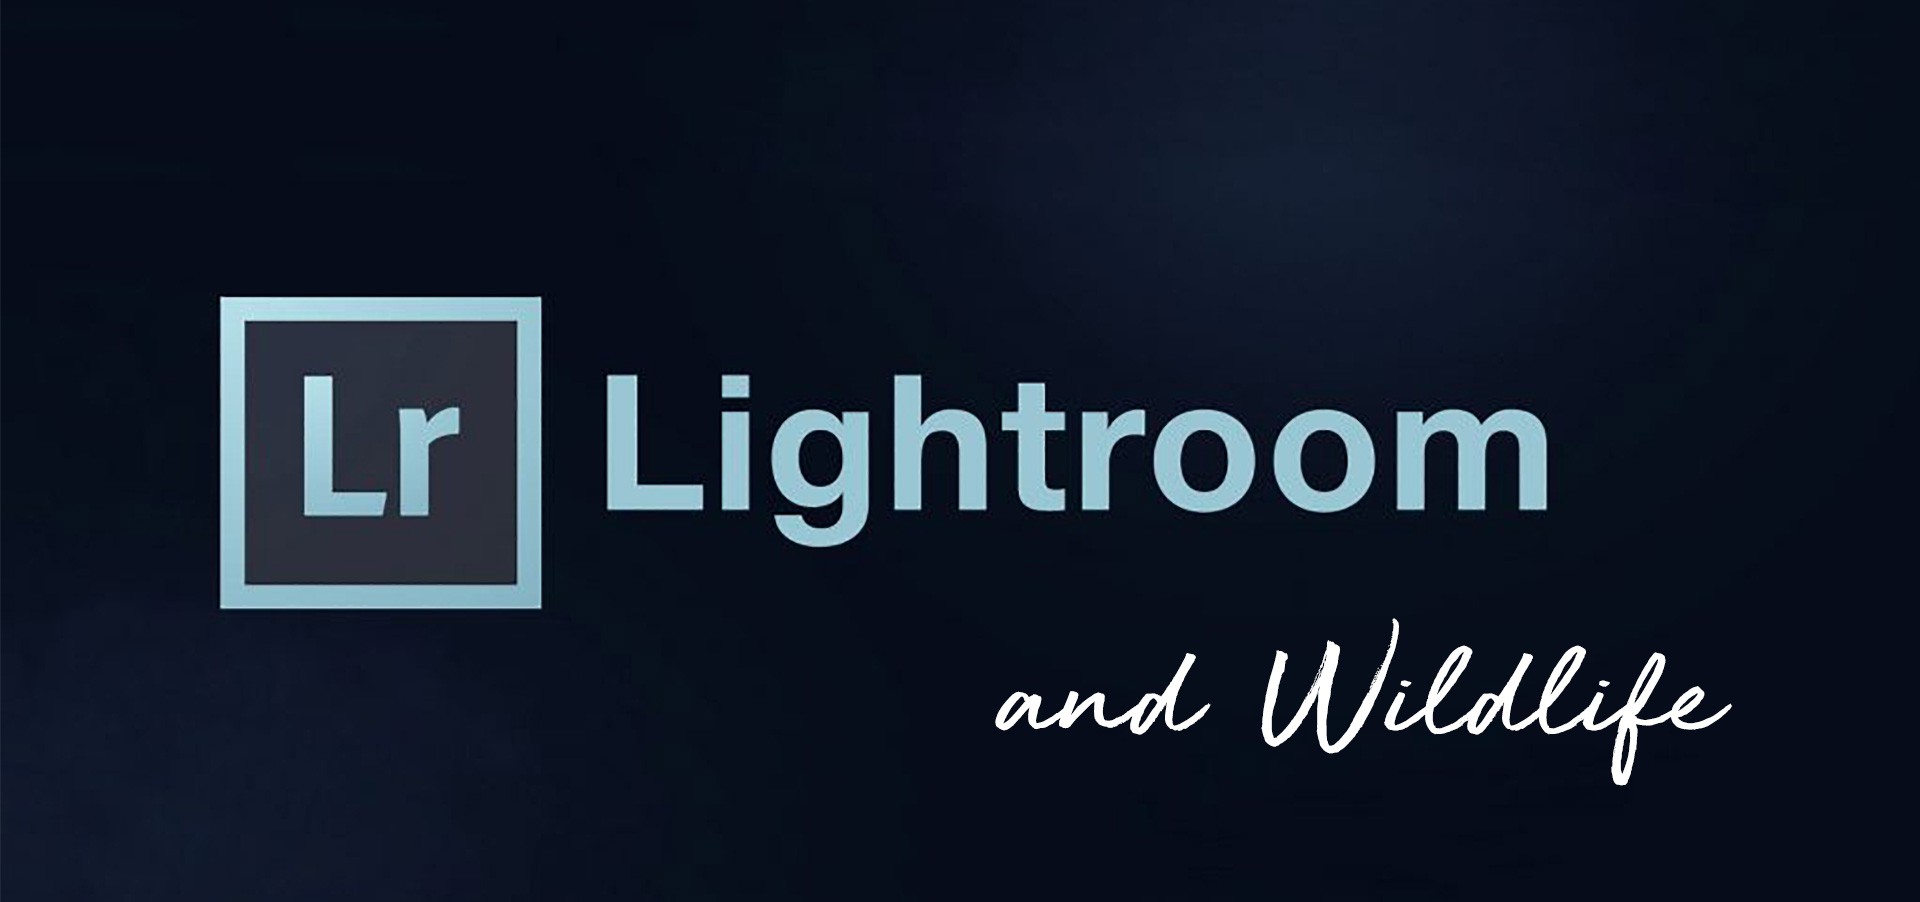 Expert Lightroom & Wildlife Image Editing